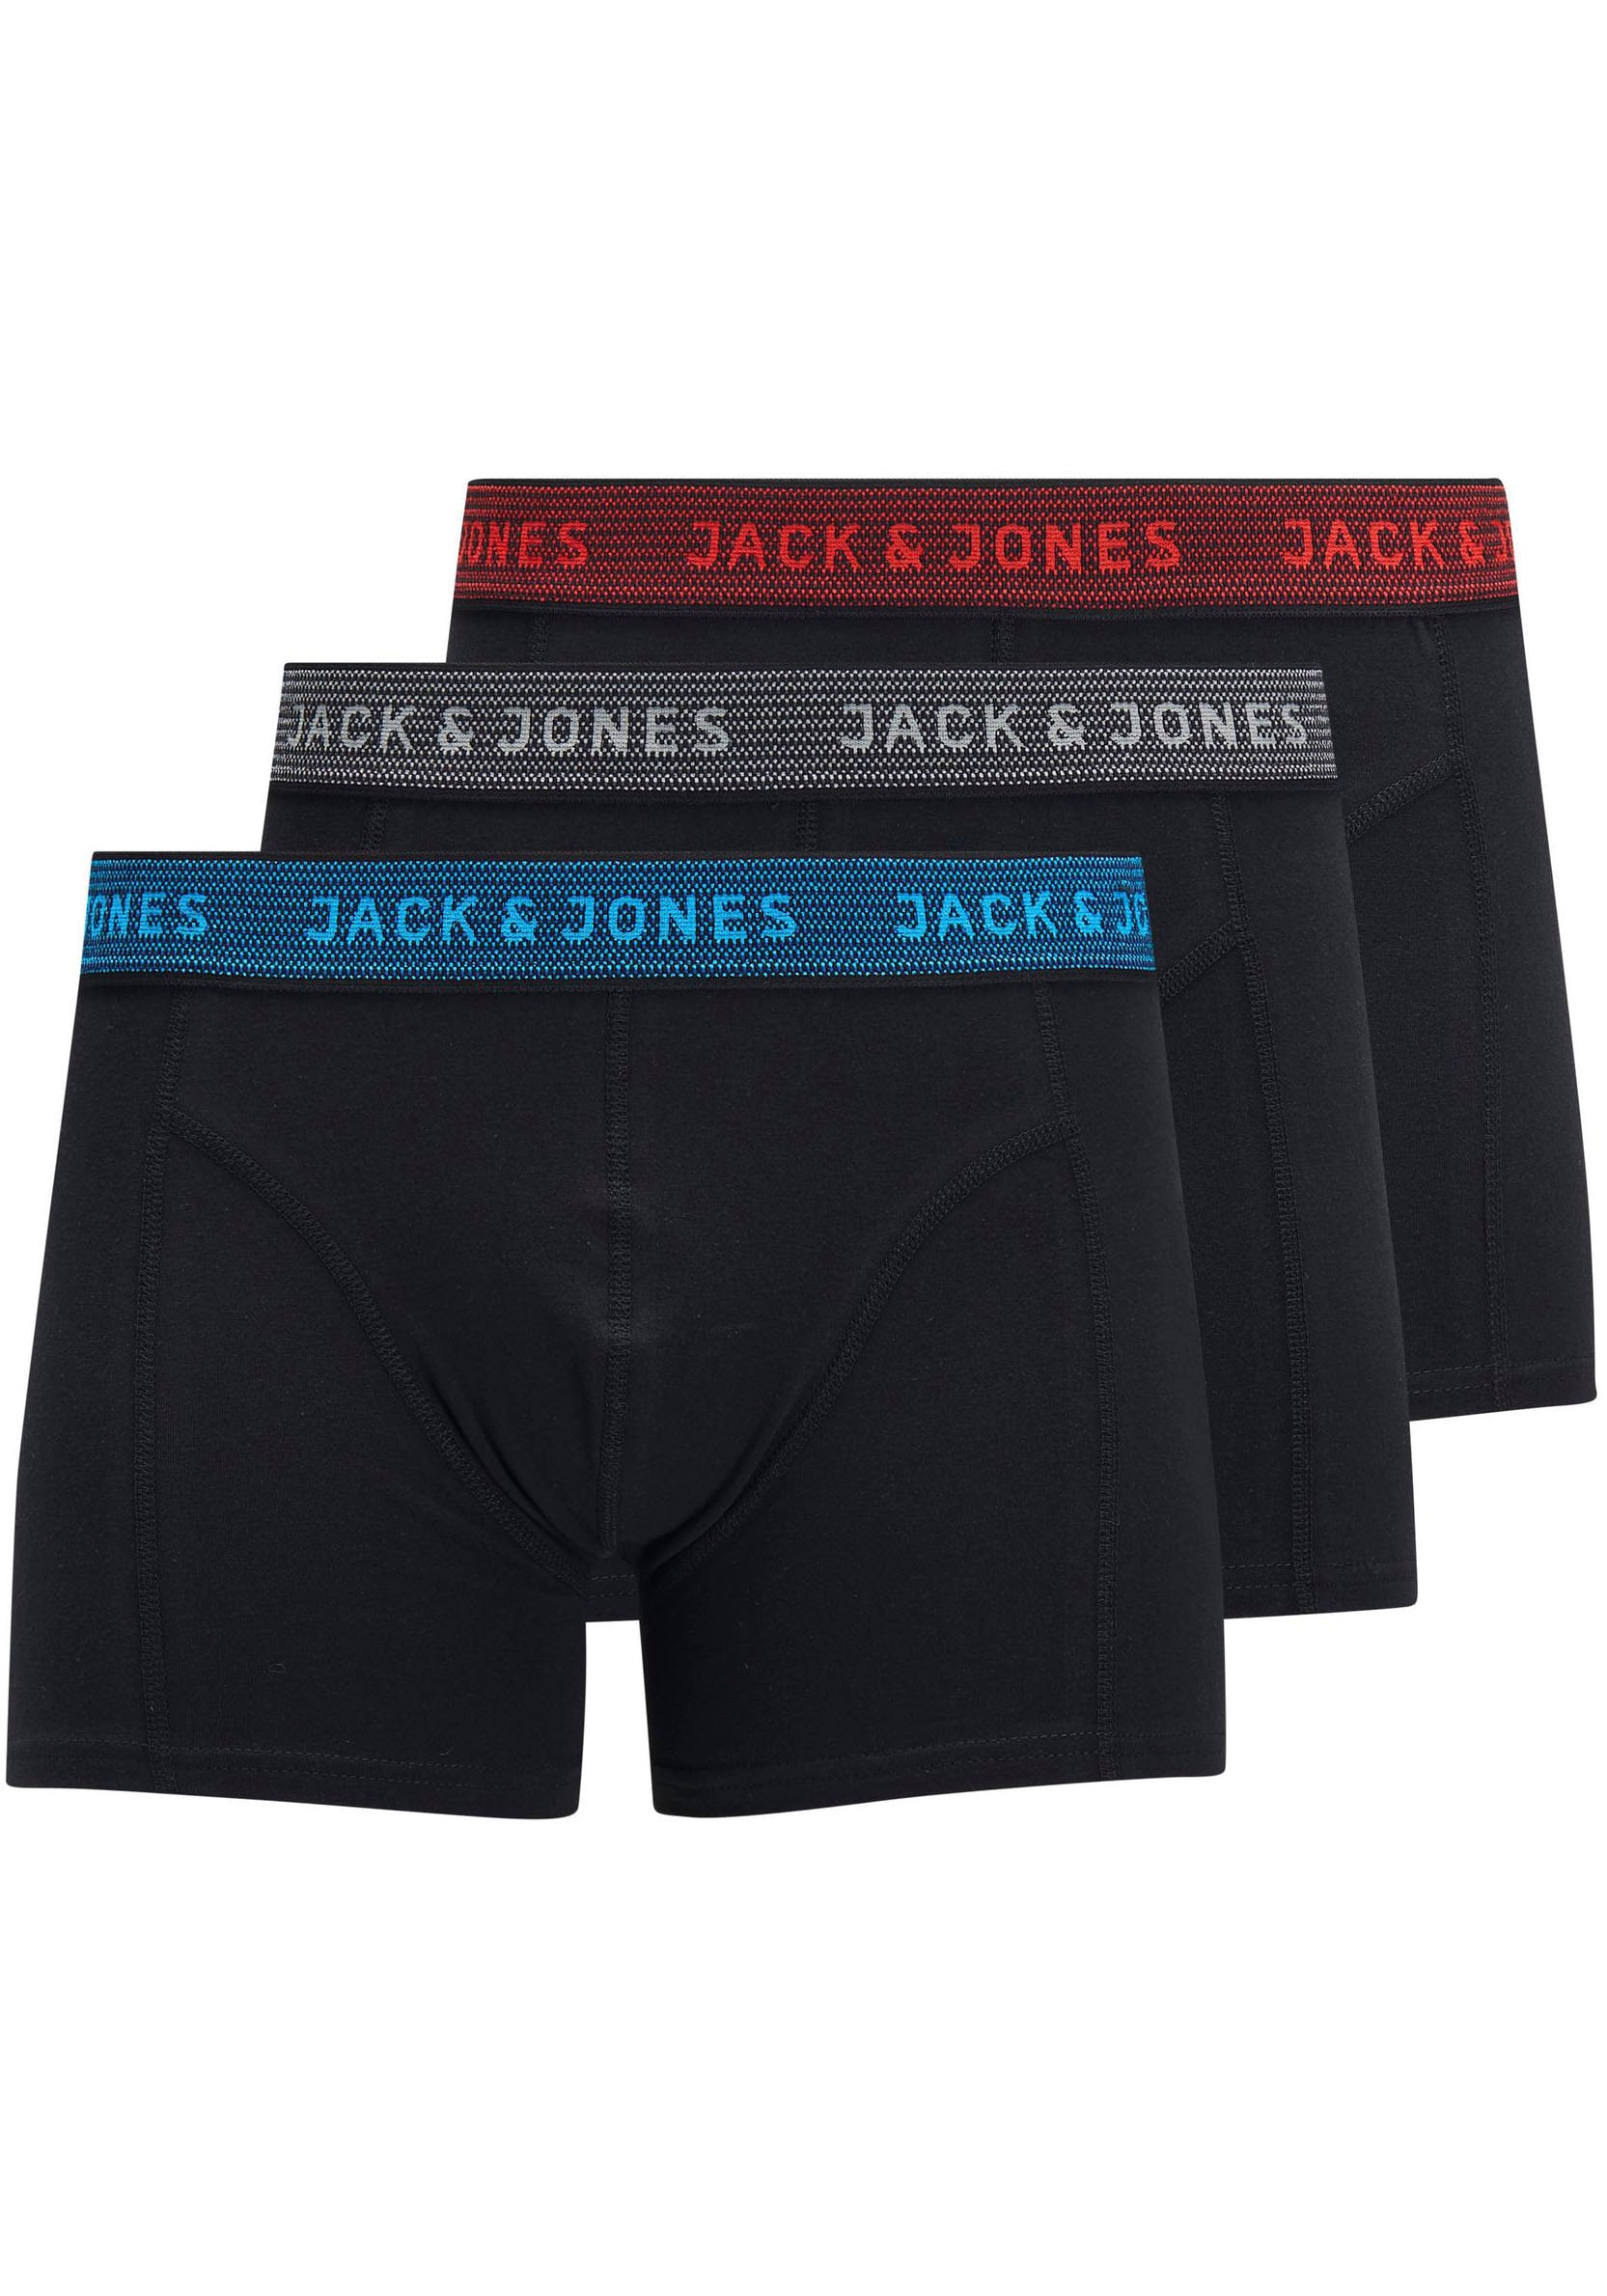 Jack & Jones Boxershorts 3 3 online Junior bei »JACWAISTBAND PAC«, St.) TRUNKS (Packung